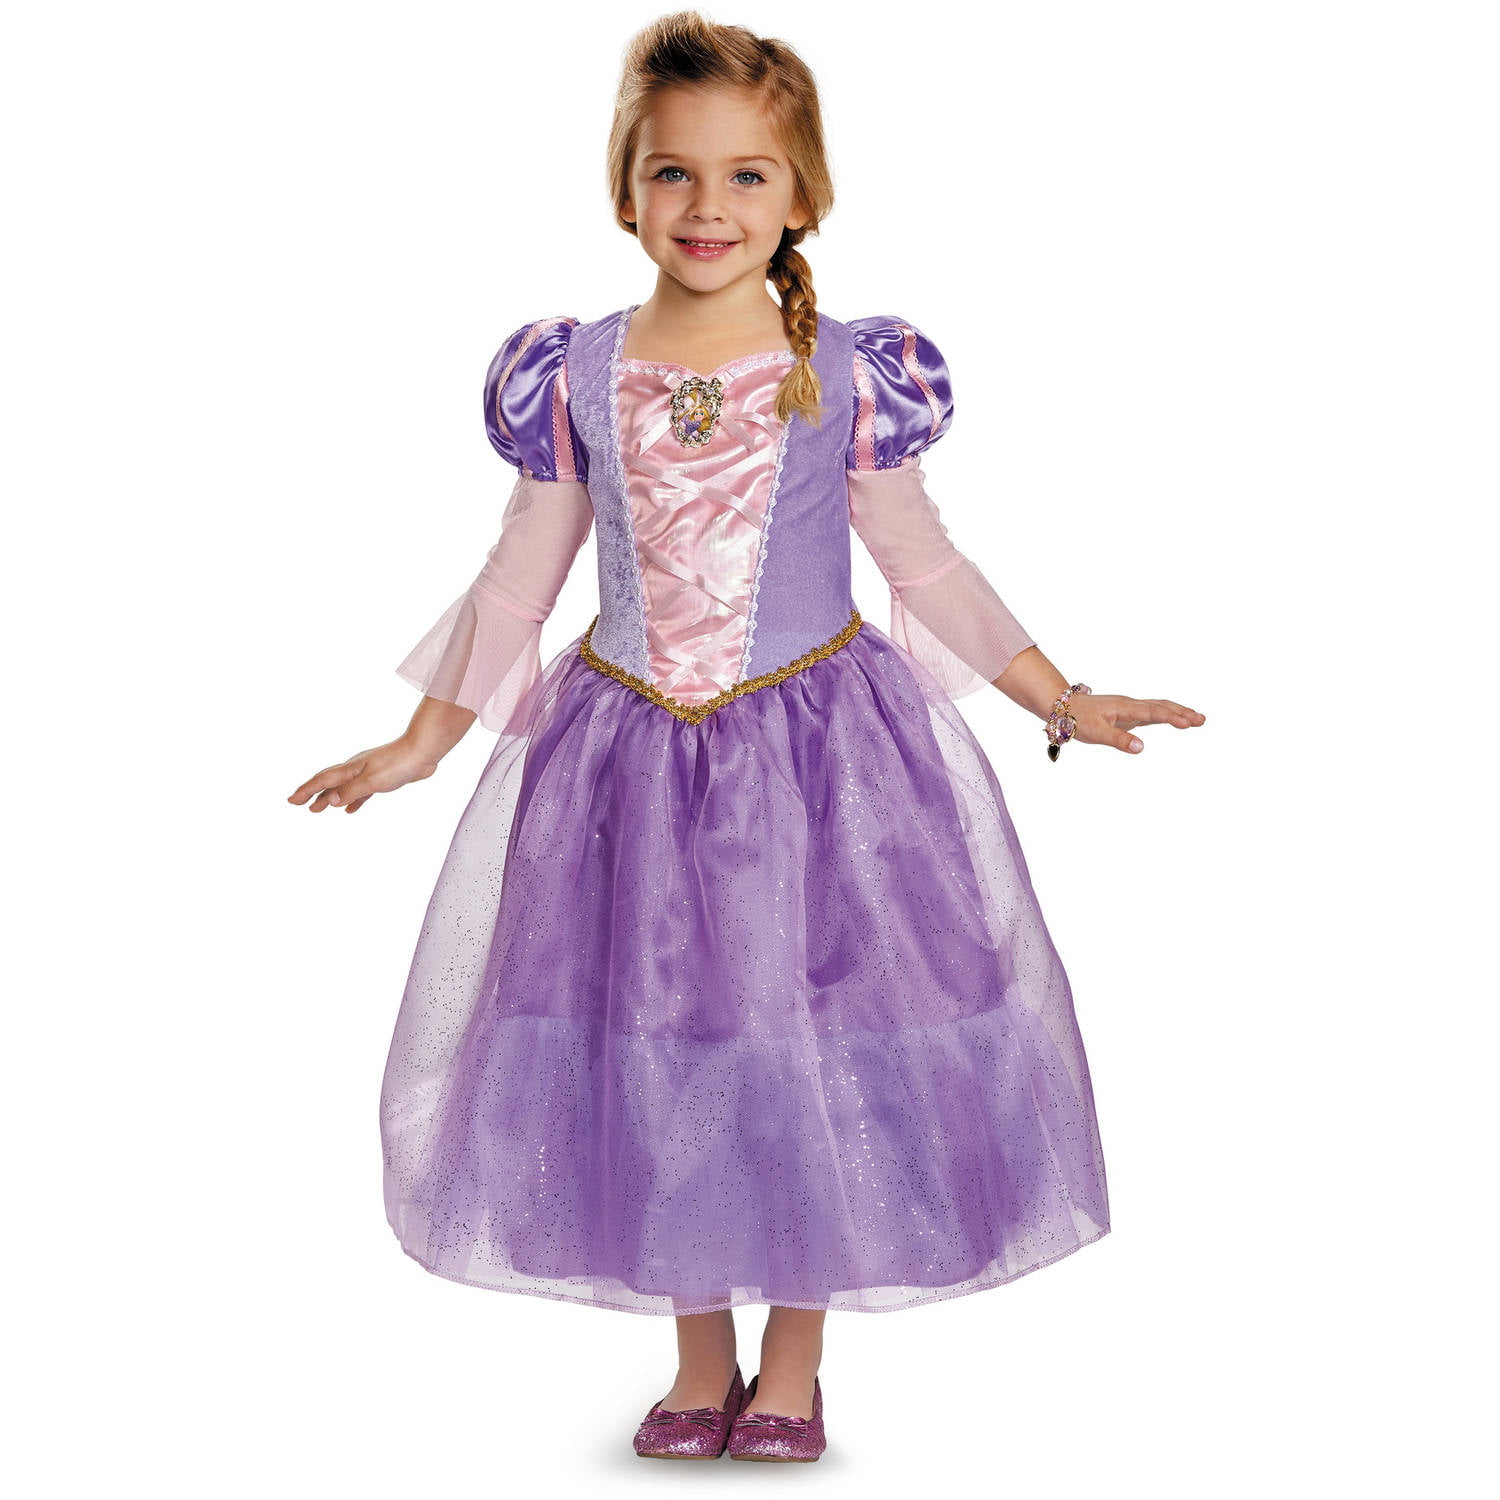 Rapunzel Deluxe Disney Princess Tangled Fancy Dress Up Halloween Child Costume 